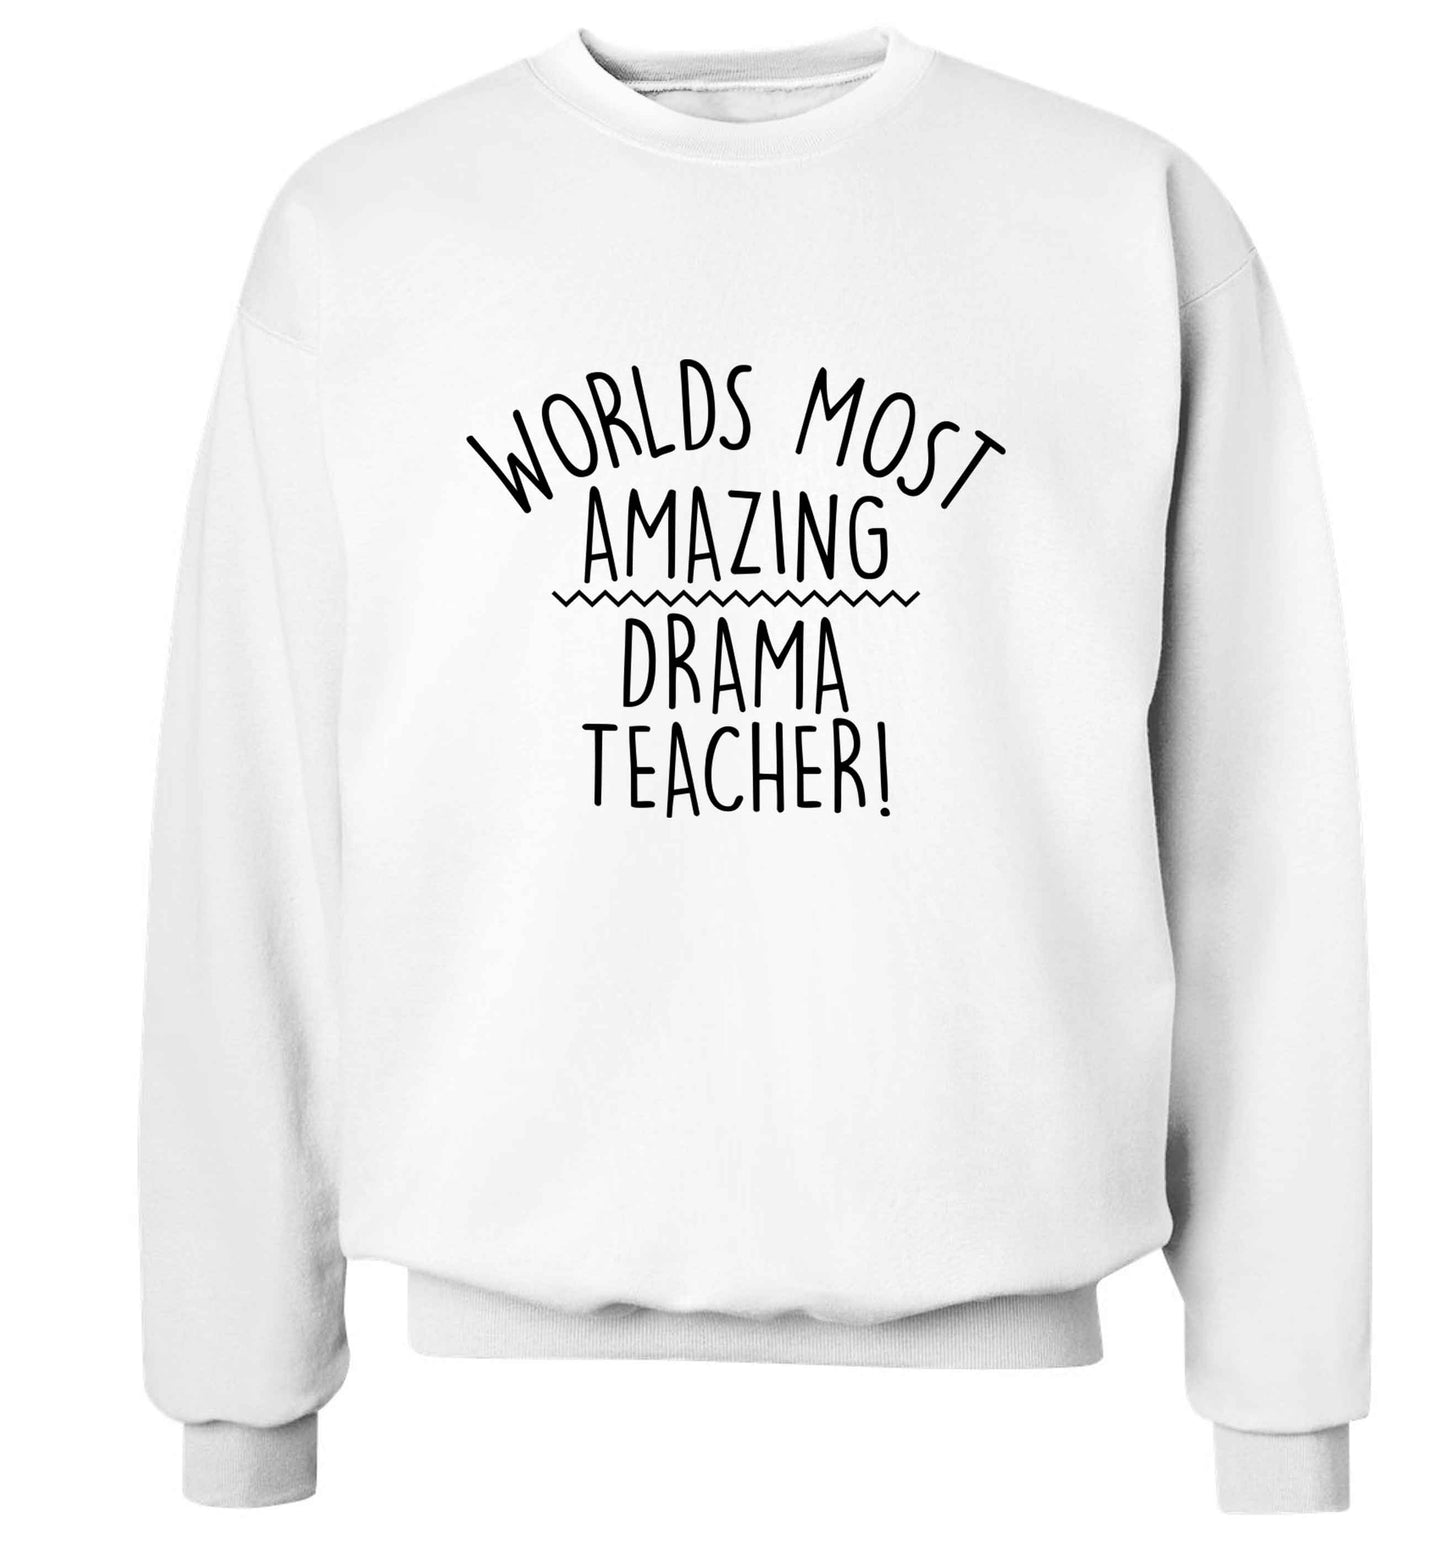 Worlds most amazing drama teacher adult's unisex white sweater 2XL